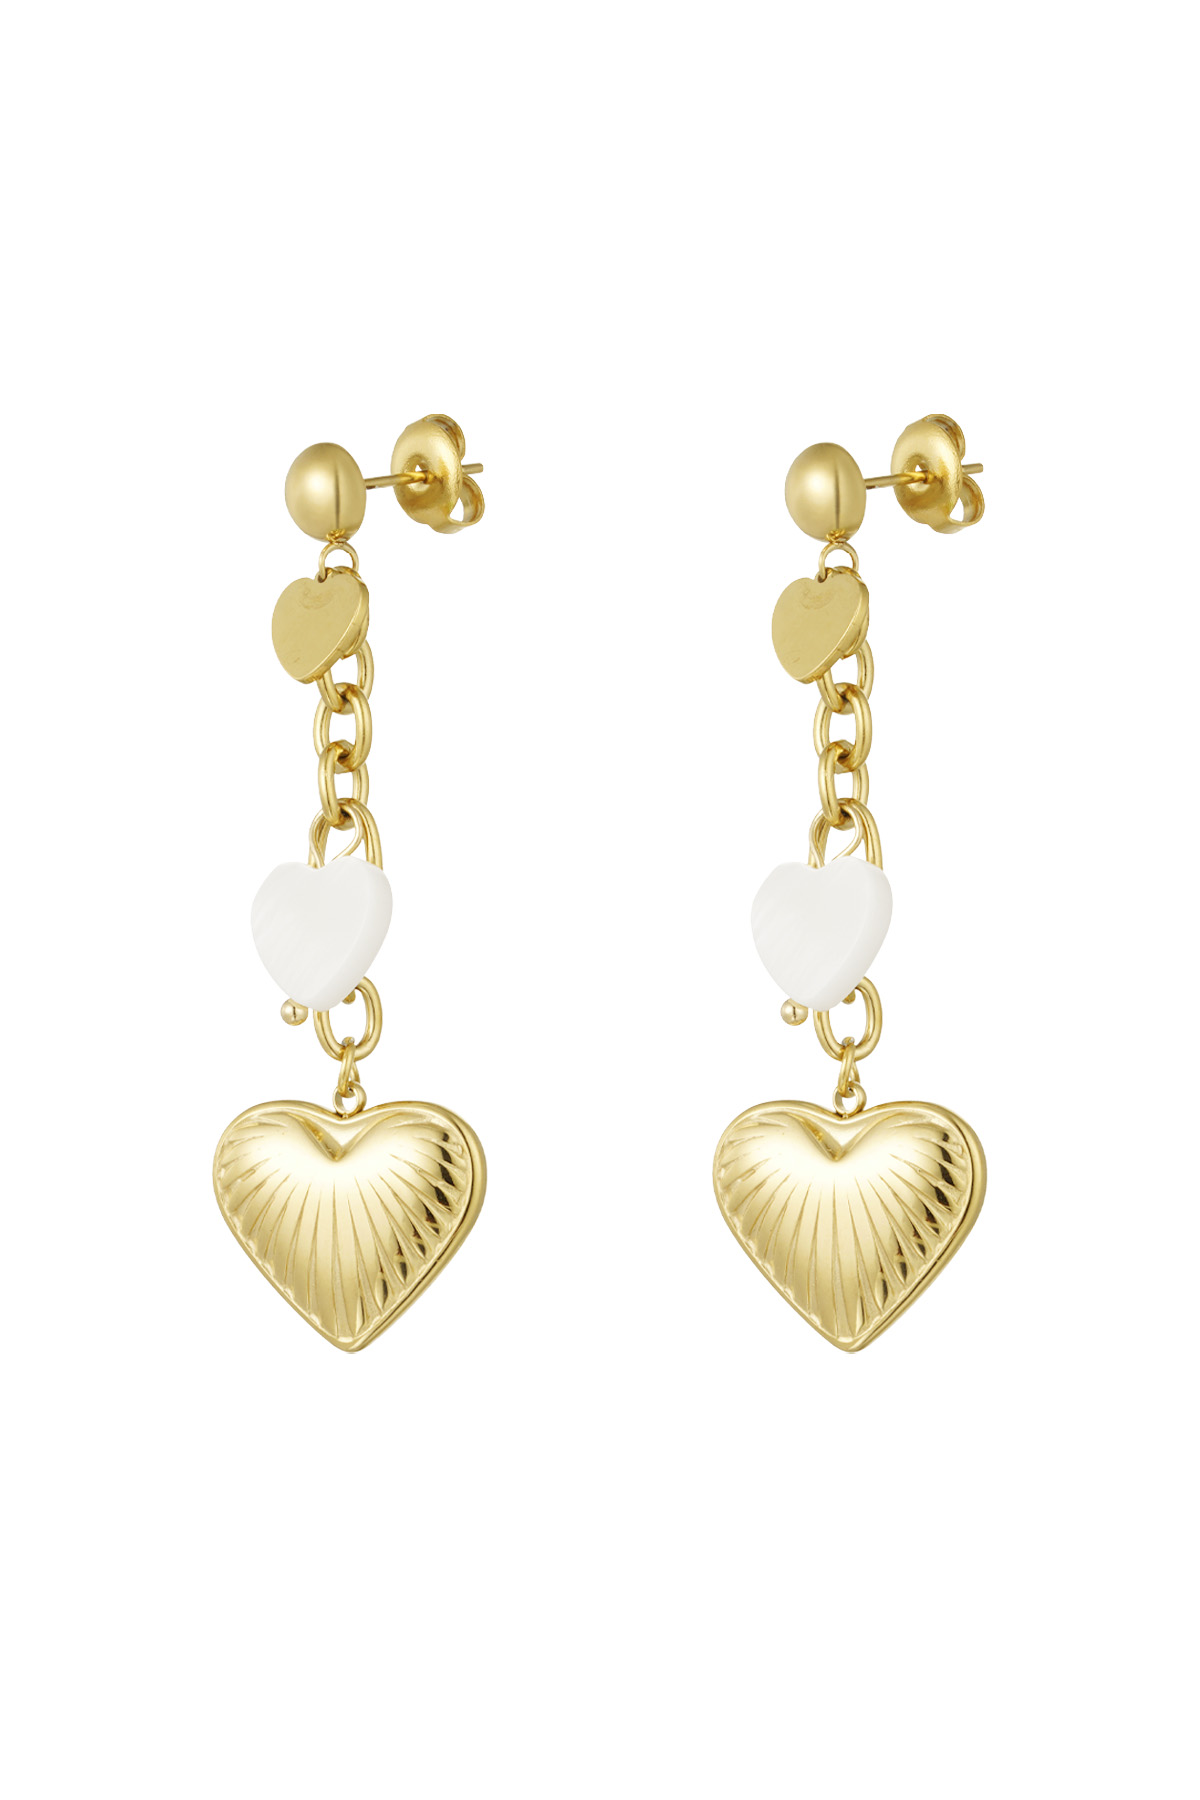 Earrings lovers life - gold